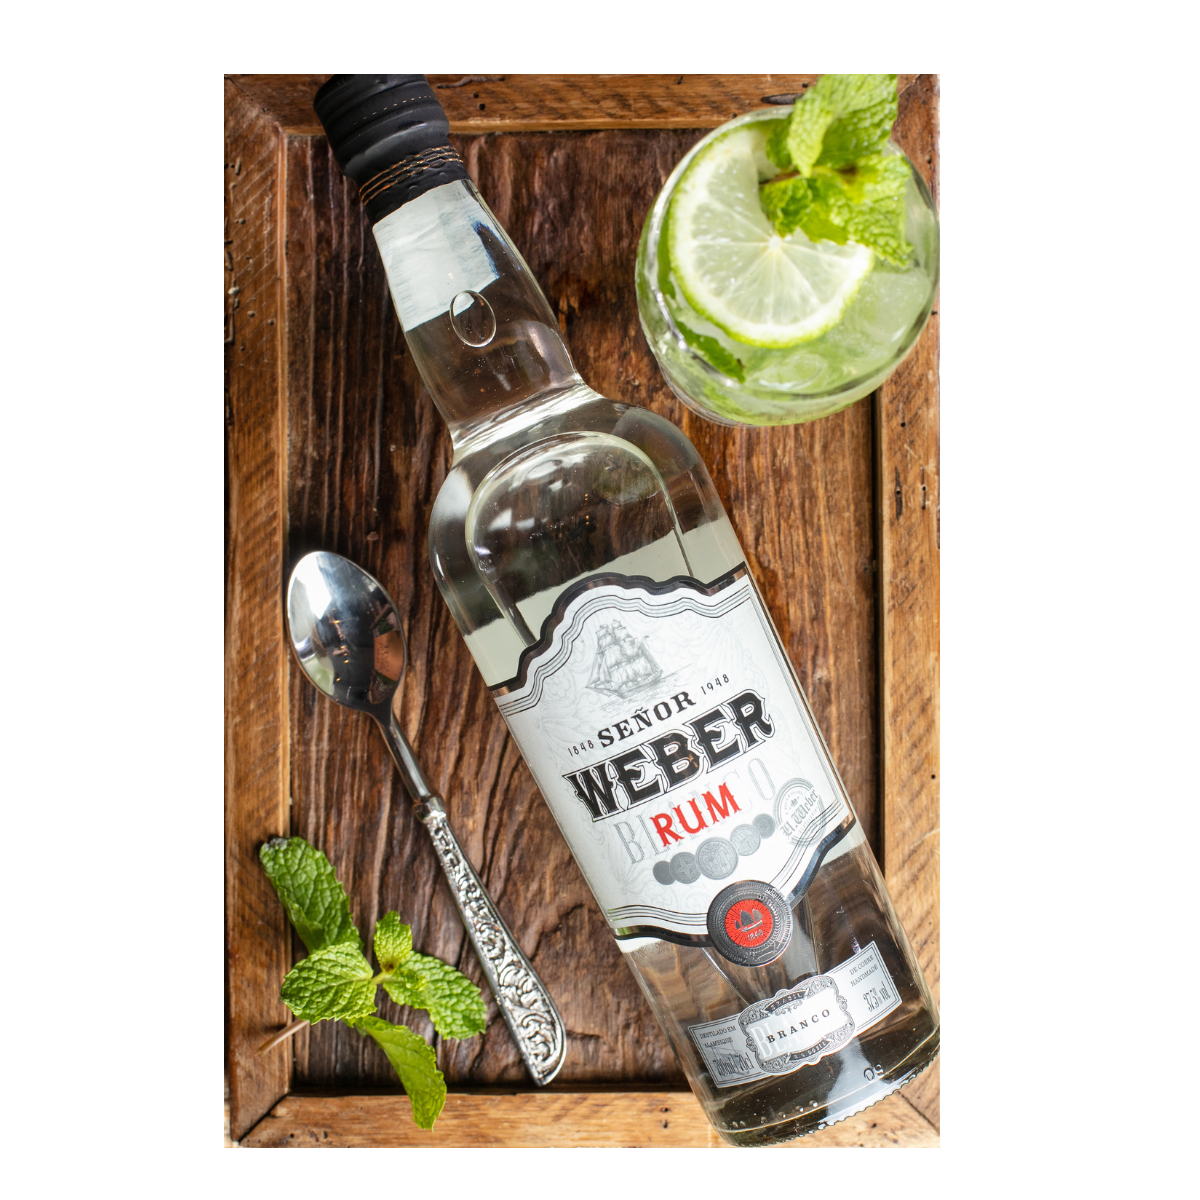 Rum Weber Haus Señor Weber Blanco 700ml 37,5%